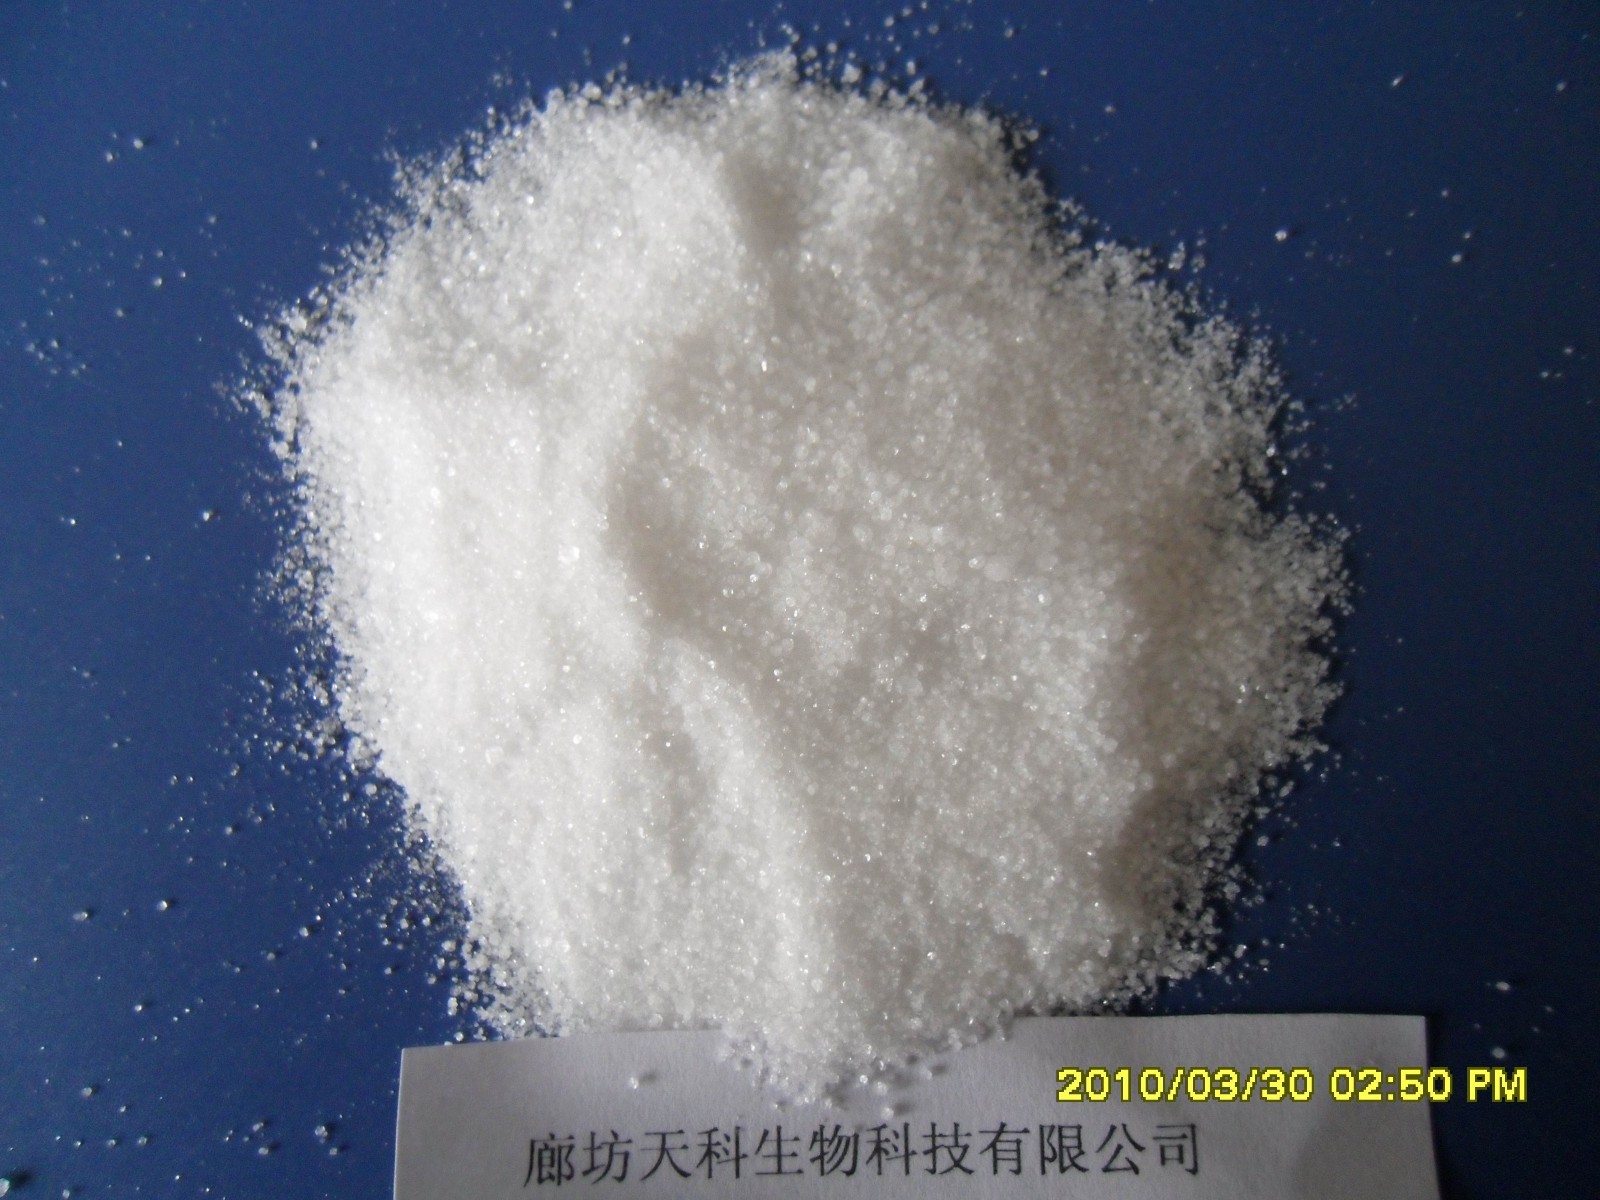 potassium dihydrogen phosphate 99.5%